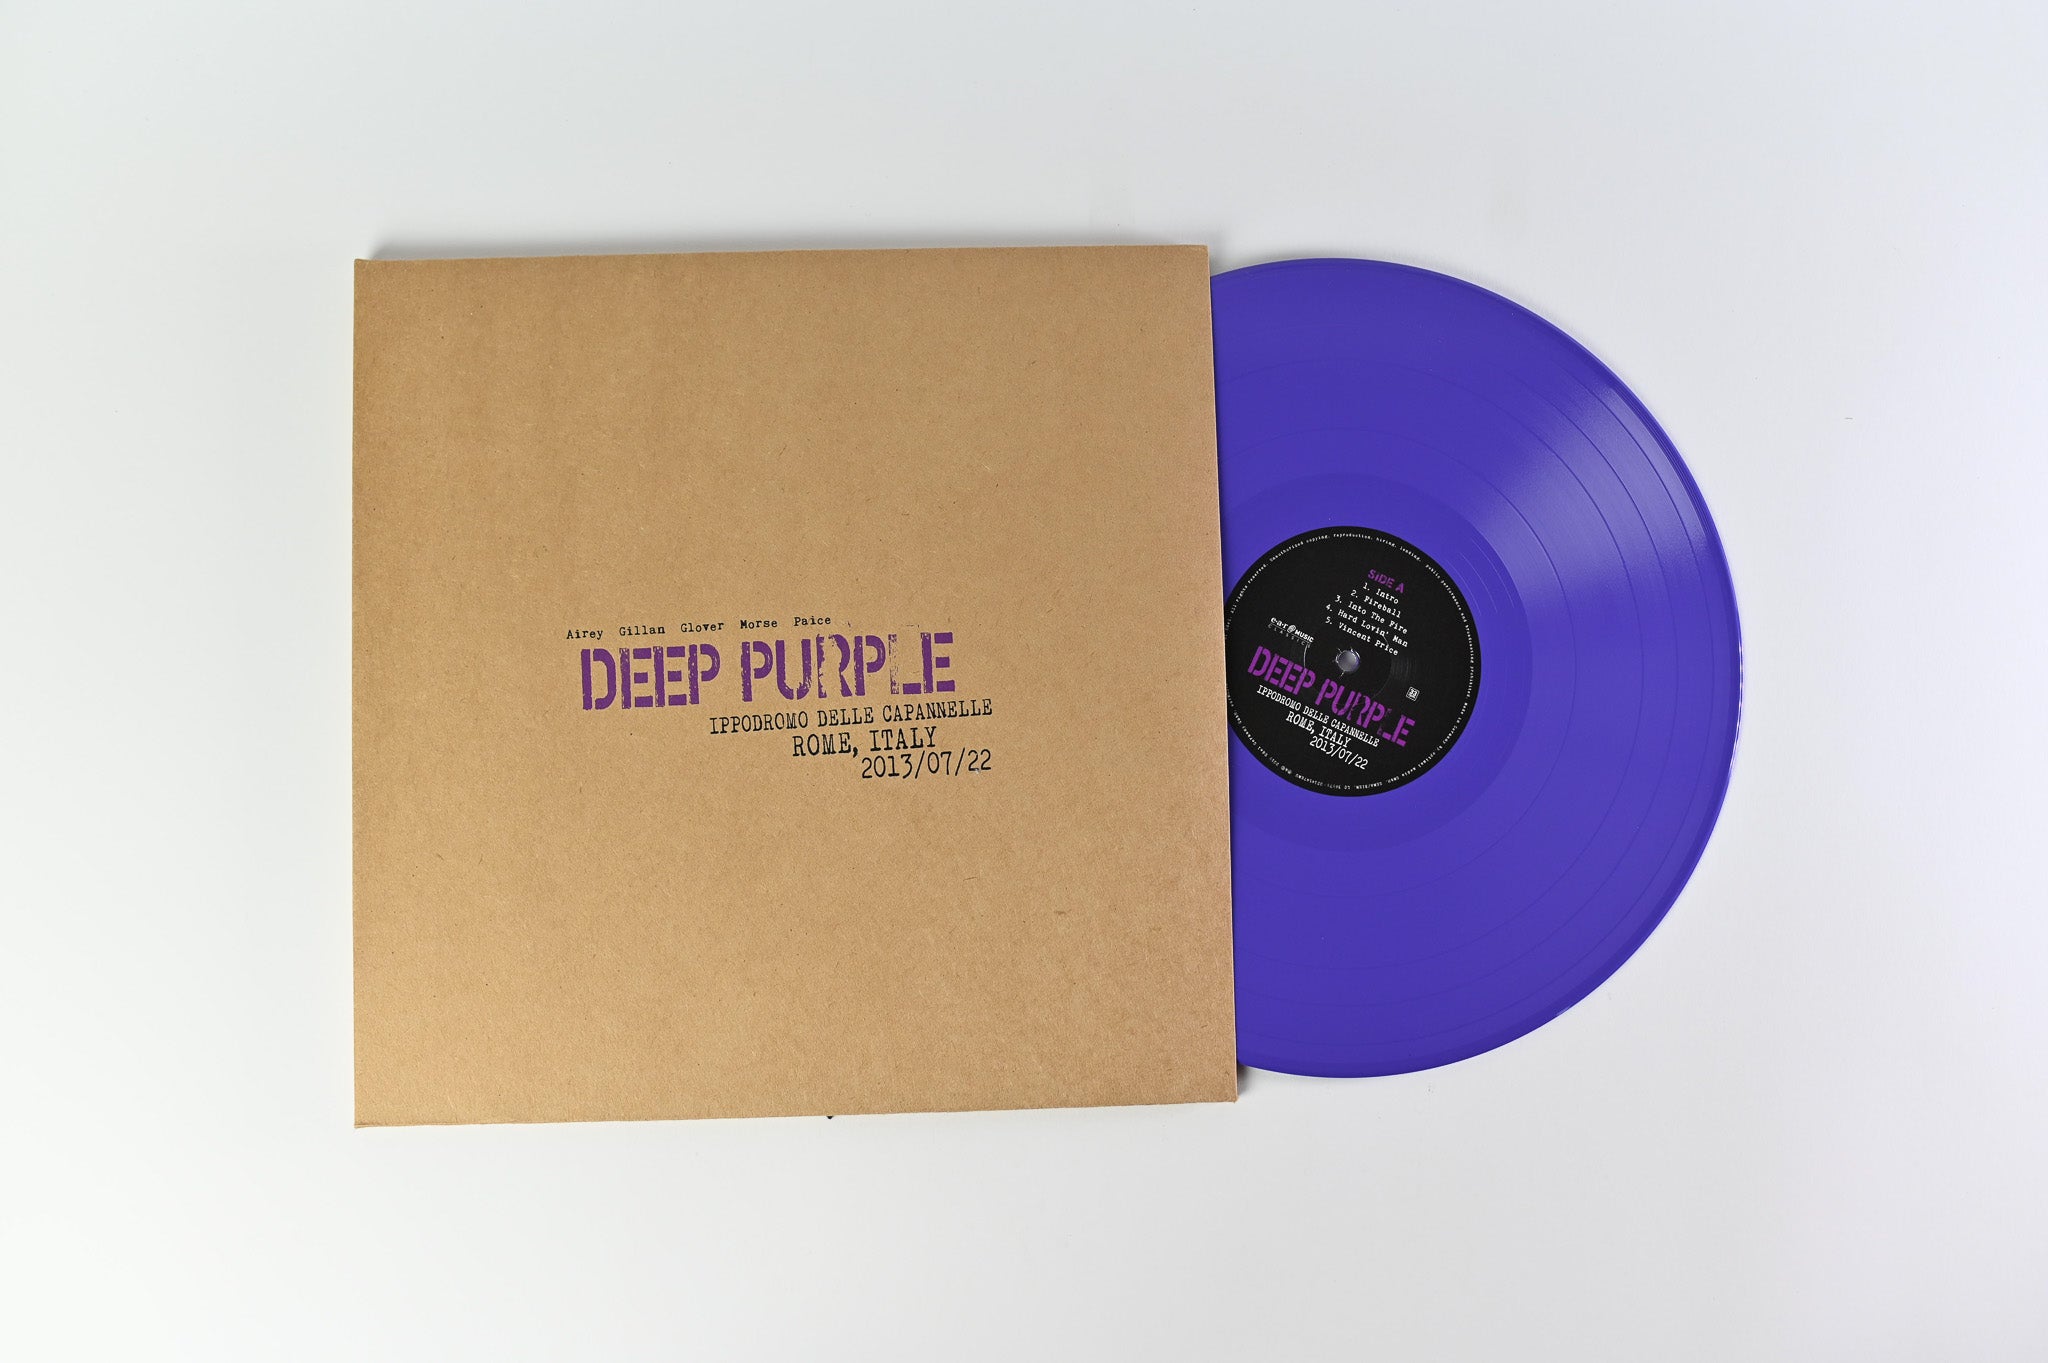 Deep Purple - Live In Rome 2013 on Ear Music Classics Purple Vinyl